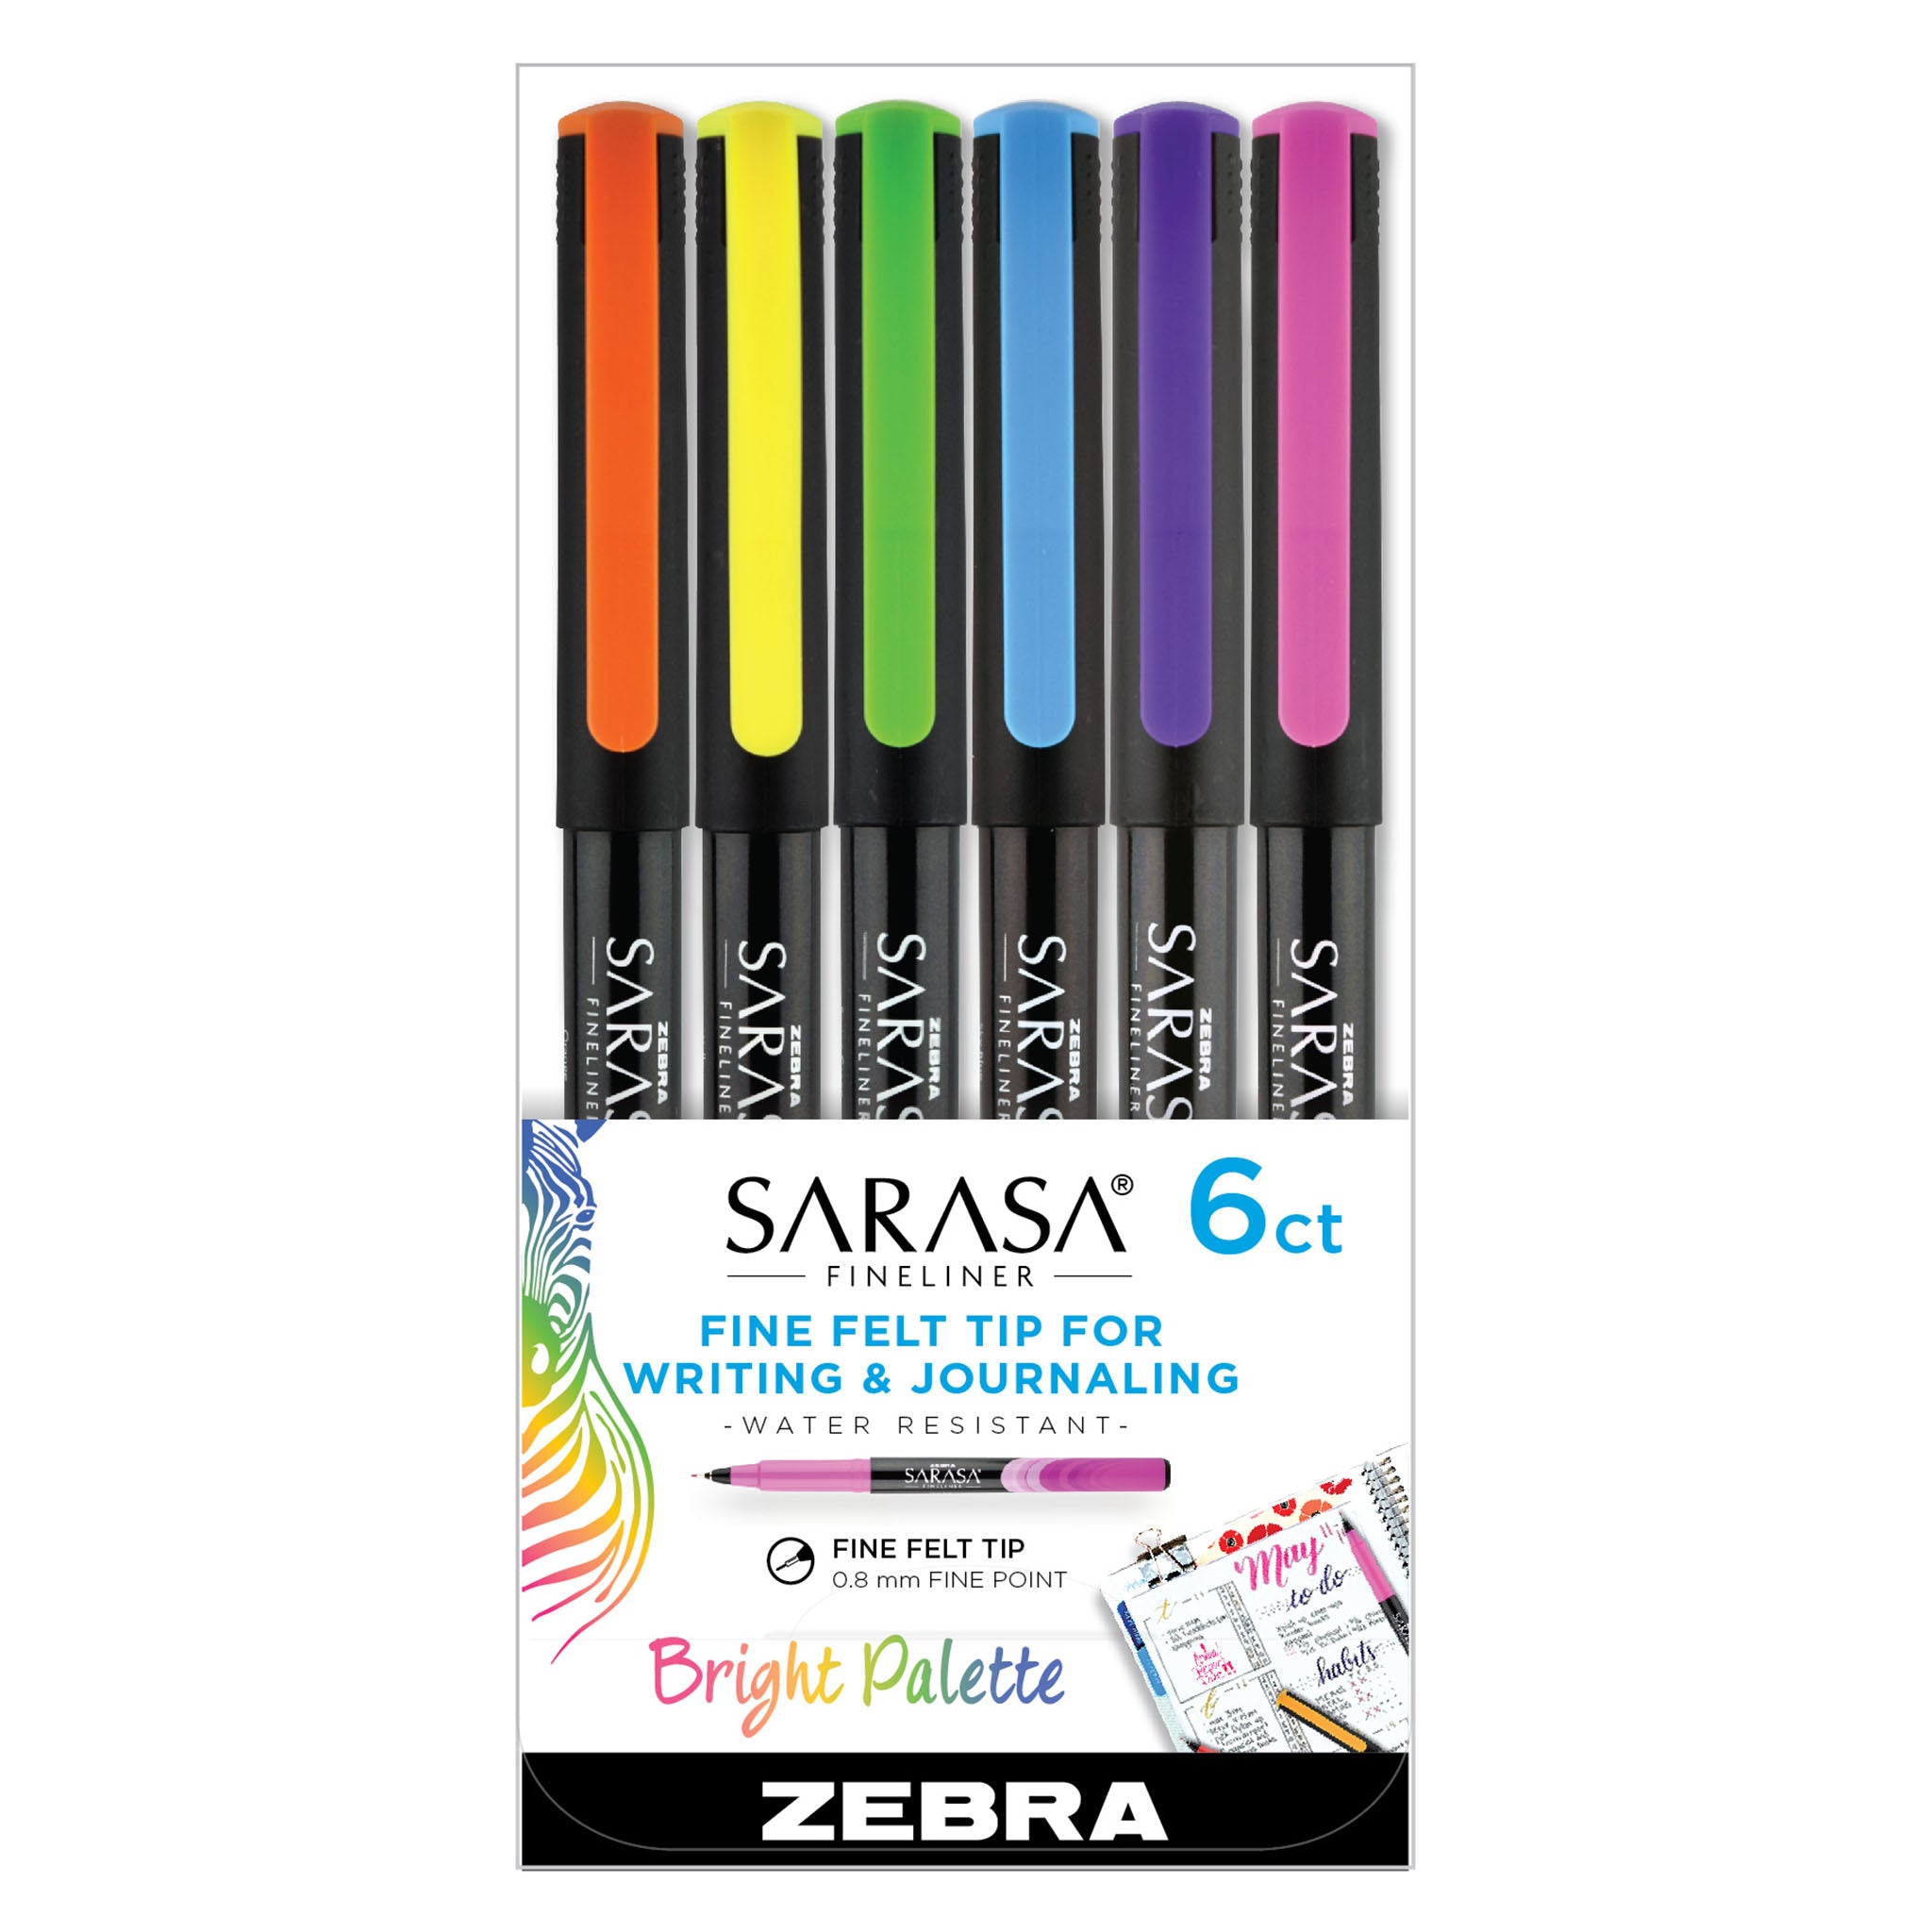 SARASA Fineliner Pen